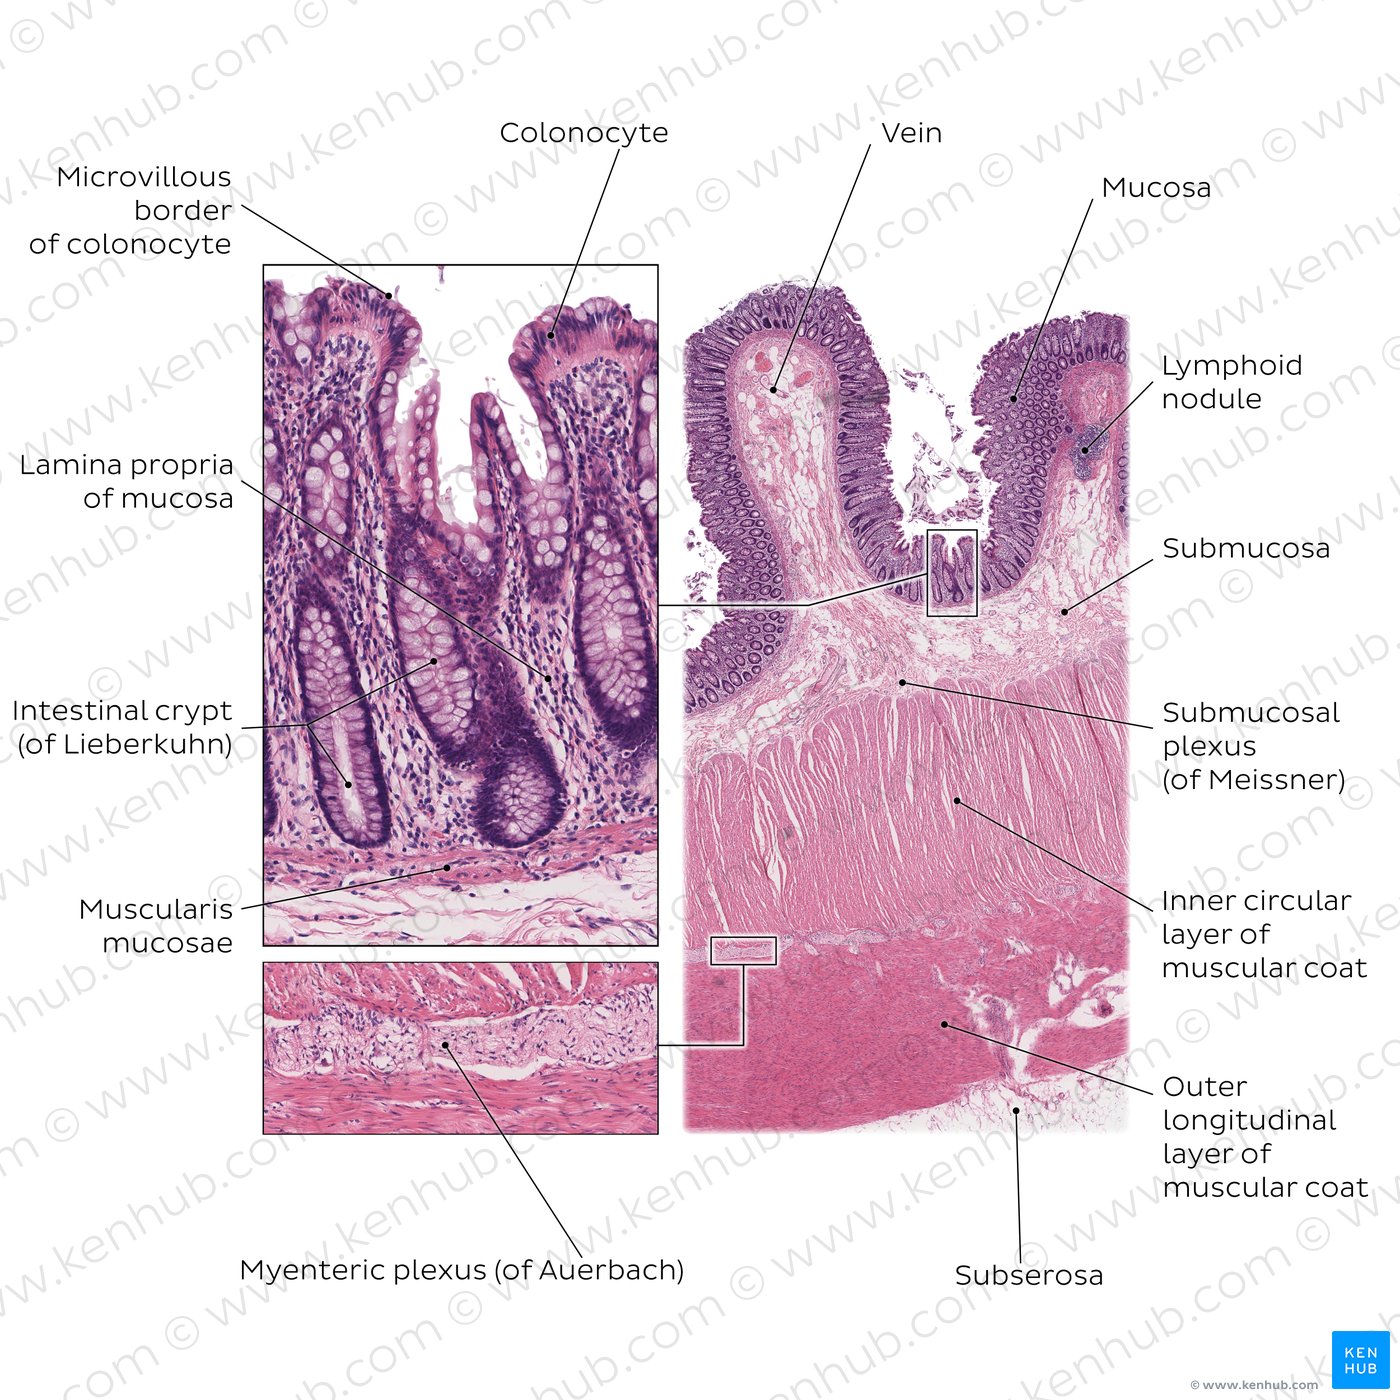 Longitudinal section of colon